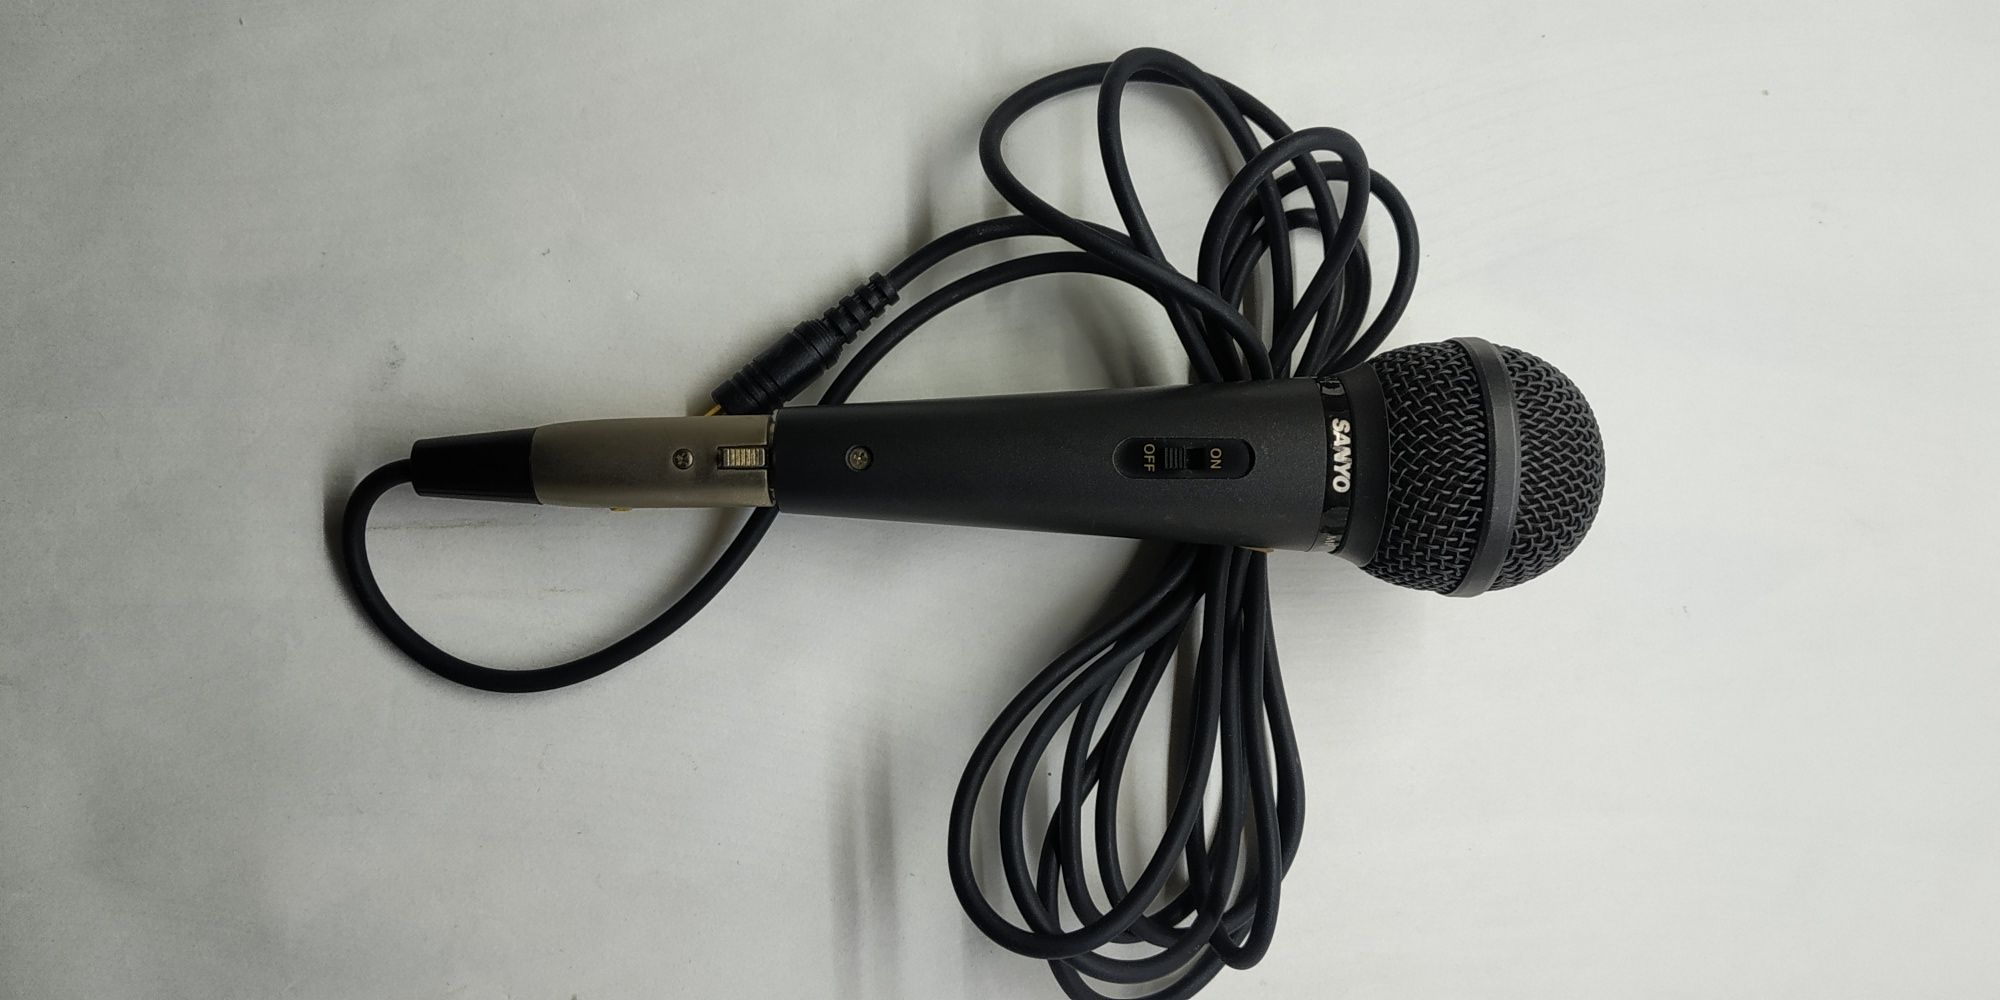 Микрофон динамический Sanyo MP 303